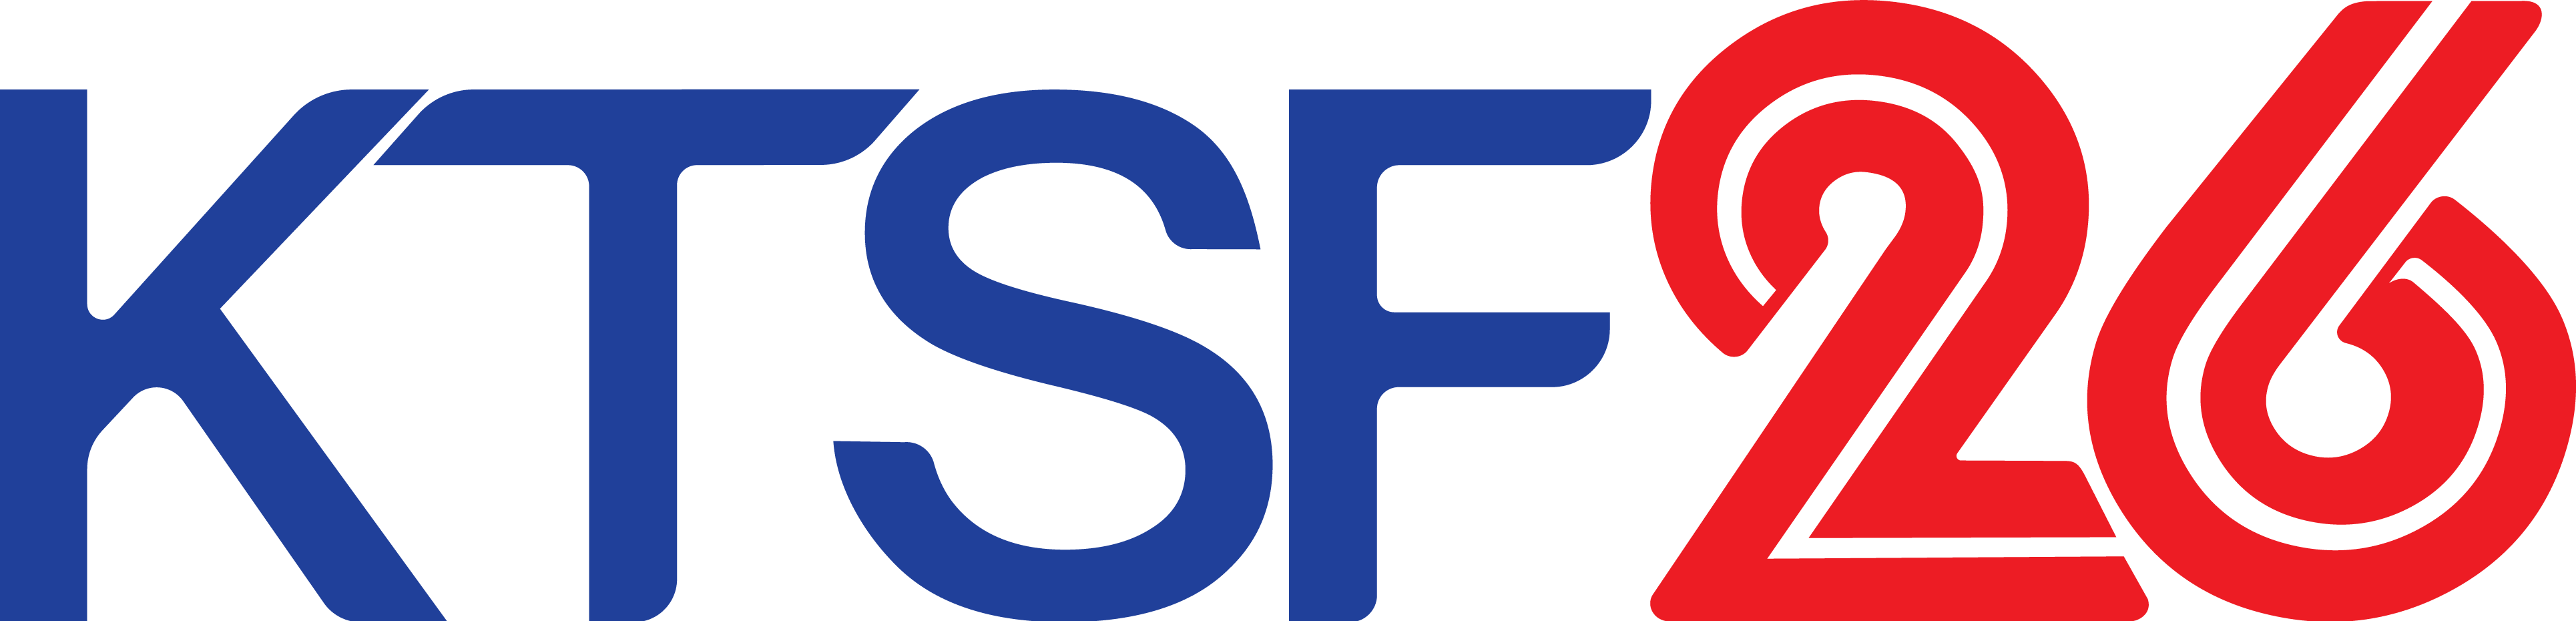 KTSF Channel 26 – San Francisco Bay Area